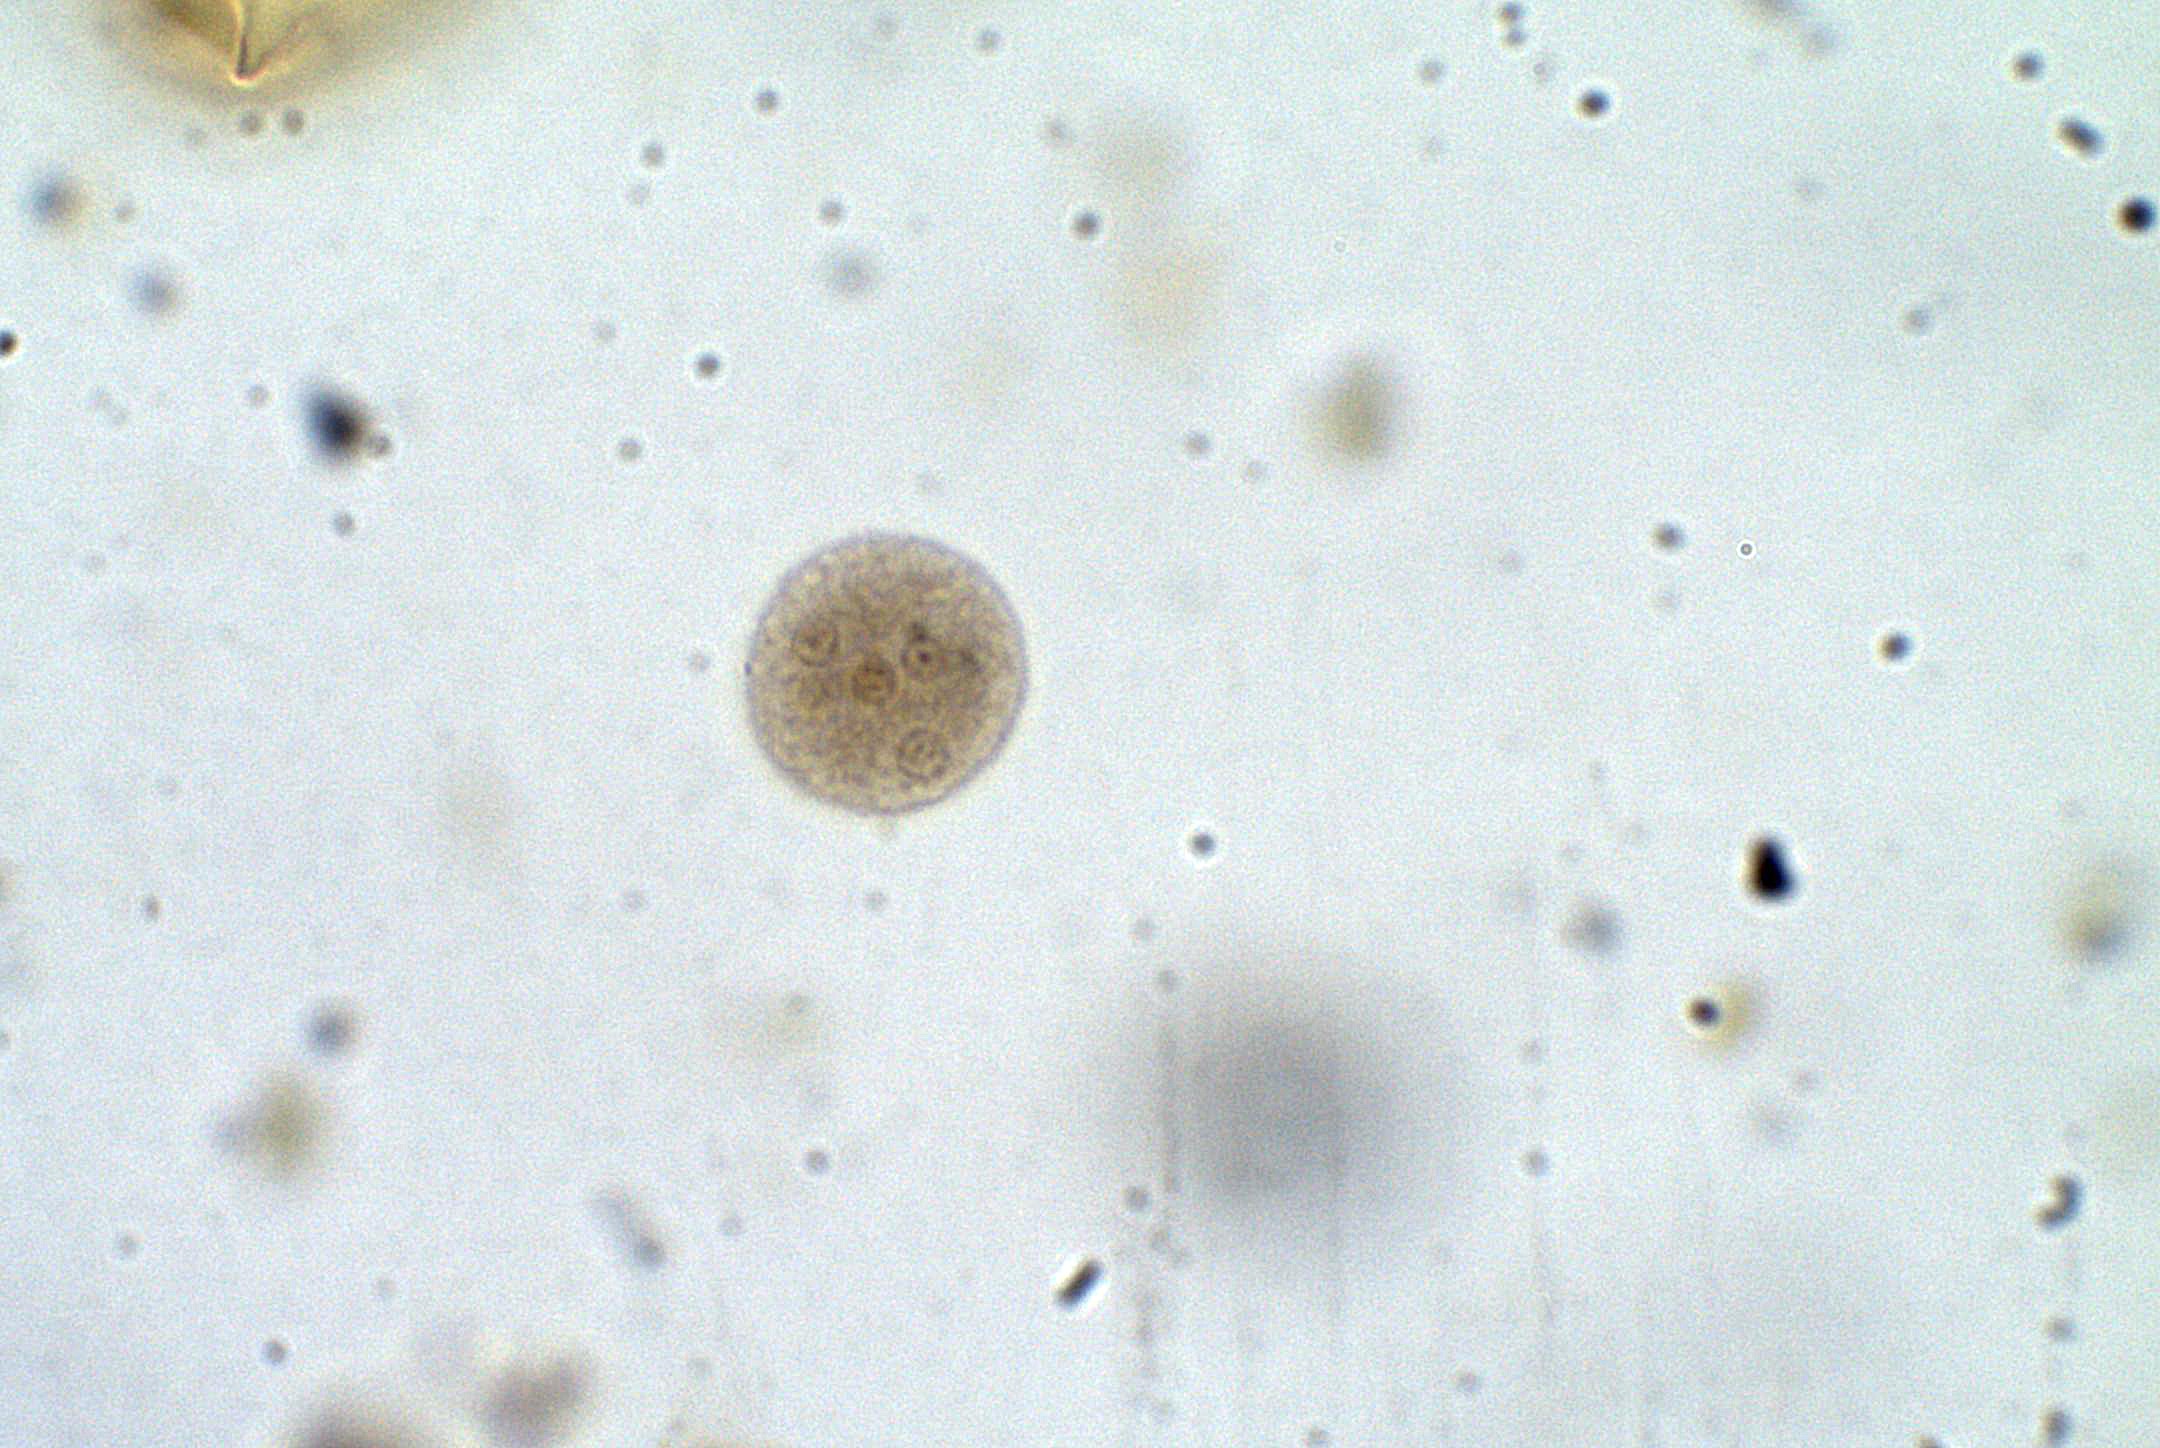 Entamoeba coli в кале